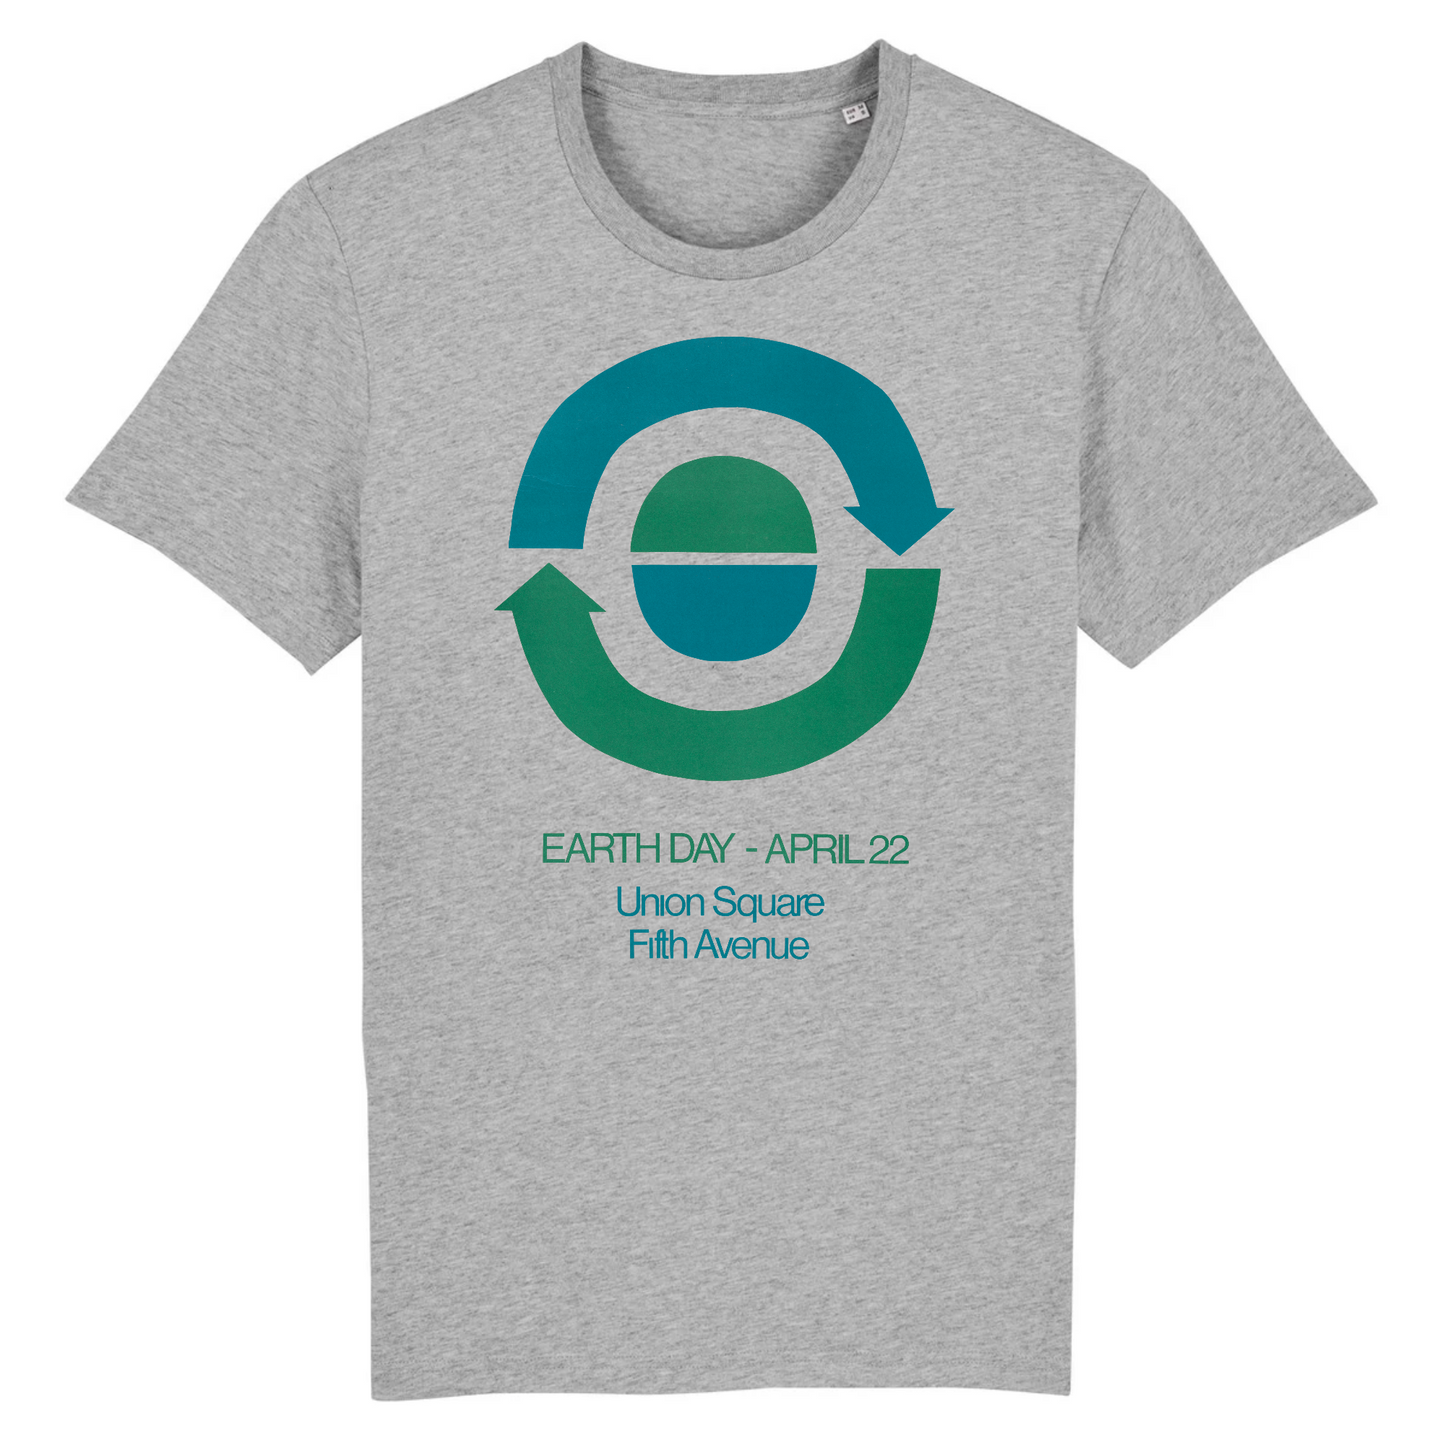 Earth Day - Organic Cotton T-shirt